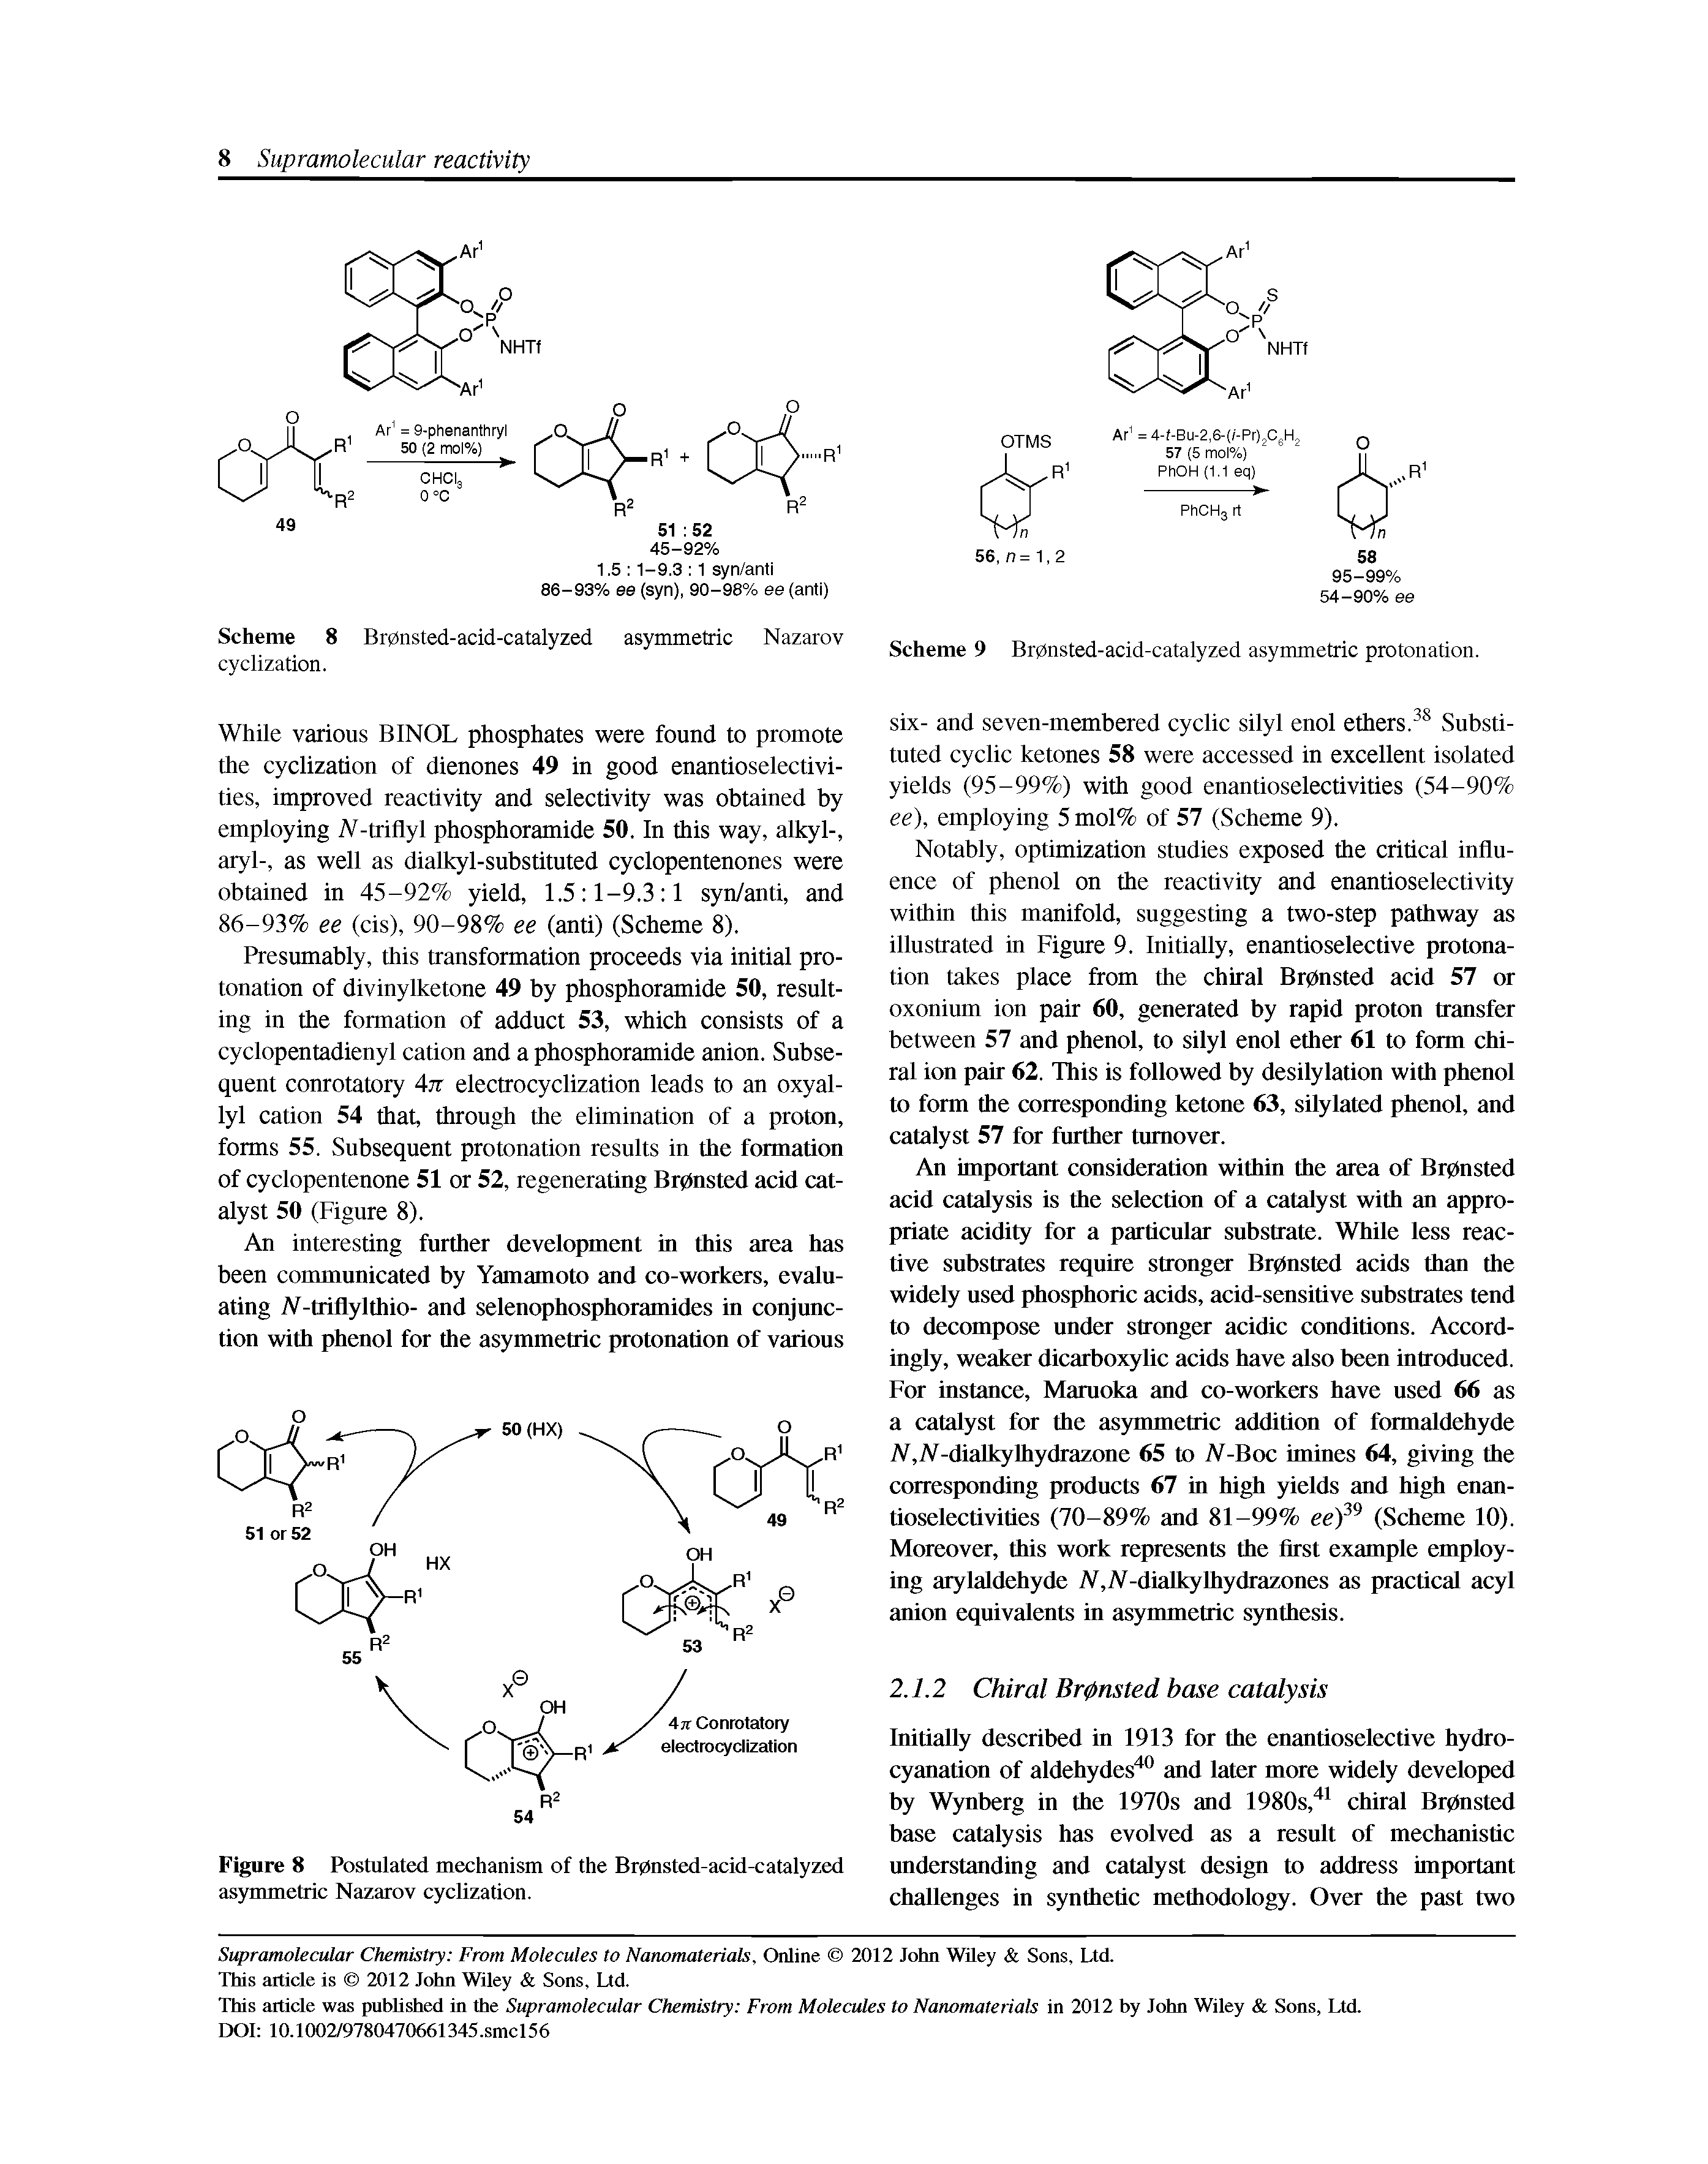 Figure 8 Postulated mechanism of the Brpnsted-acid-catalyzed as3munetiic Nazarov cyclization.